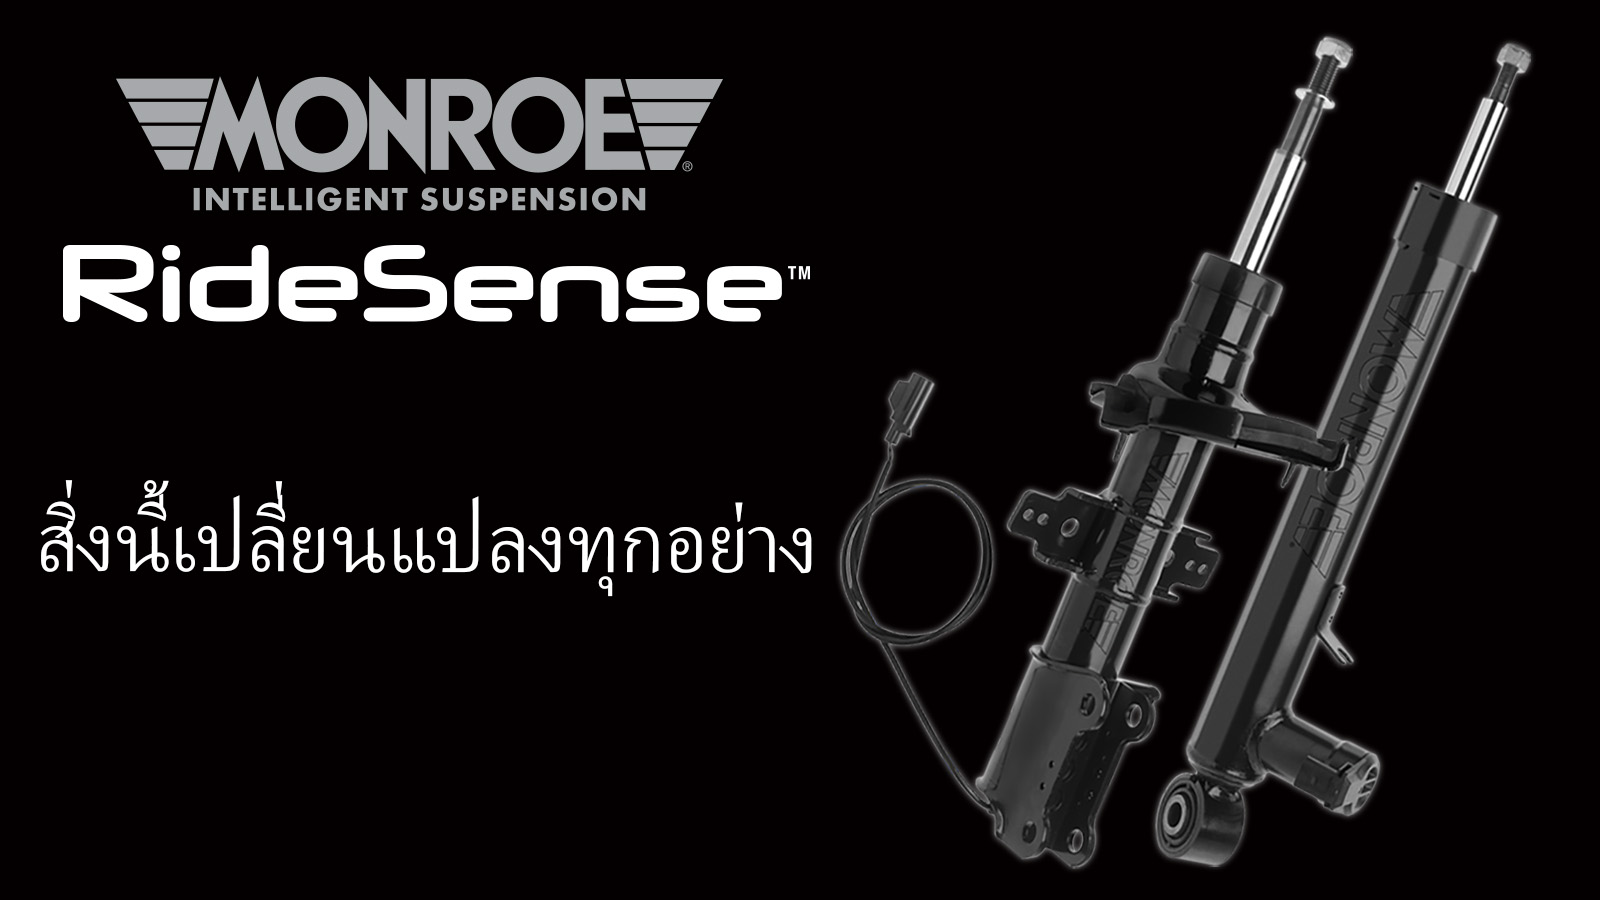 Monroe Intelligent Suspension RideSense™ - This changes everything